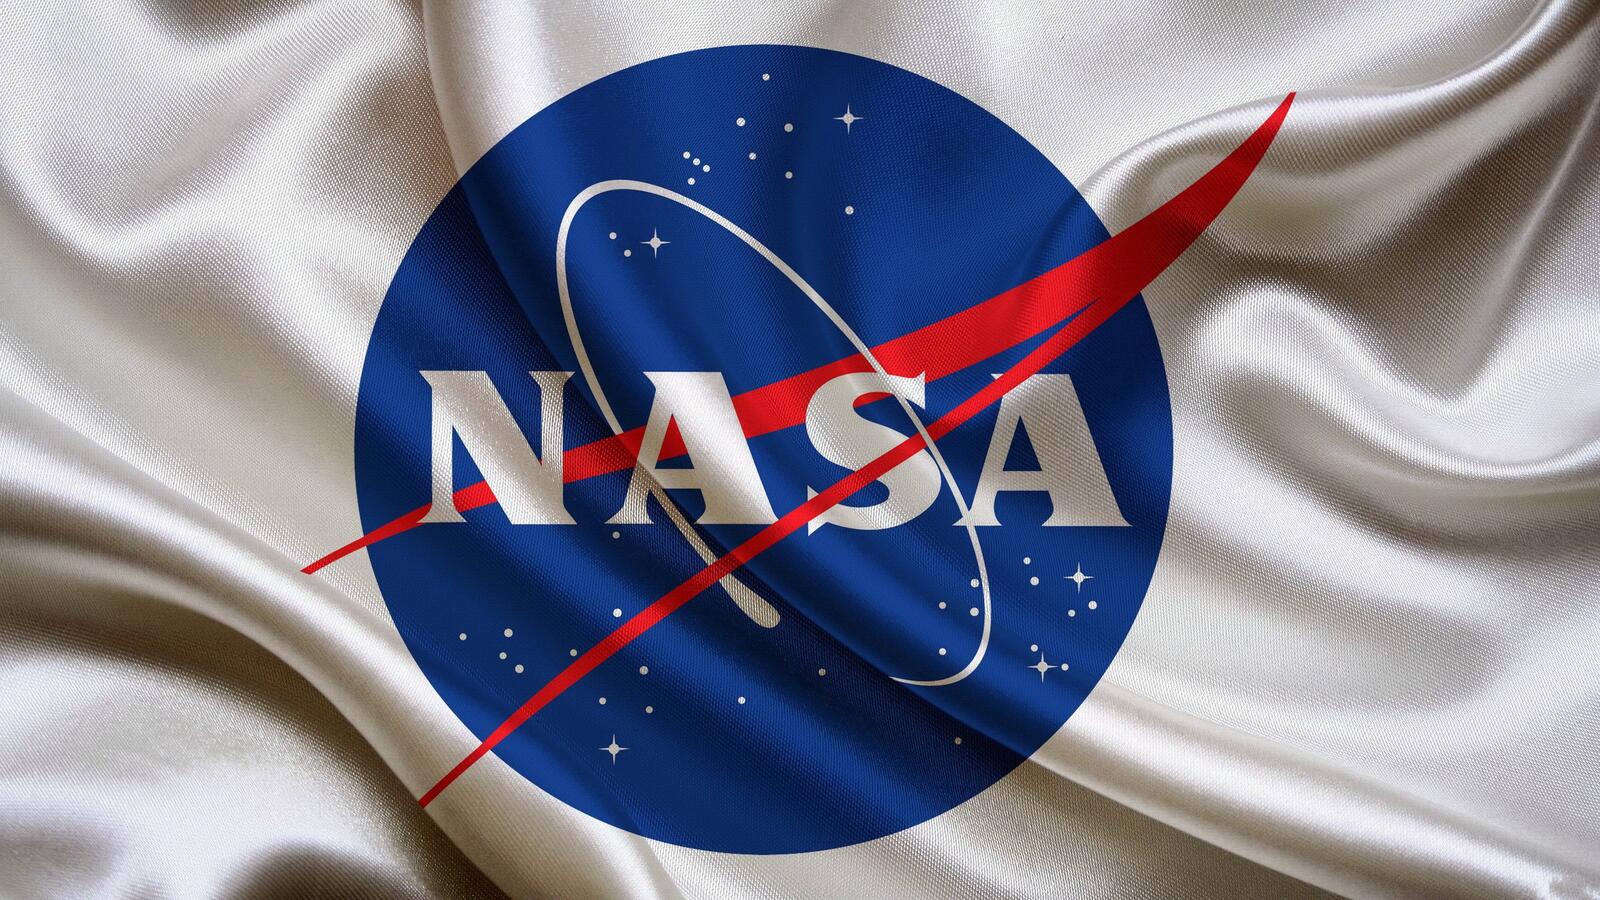 Free photo NASA logo on fabric